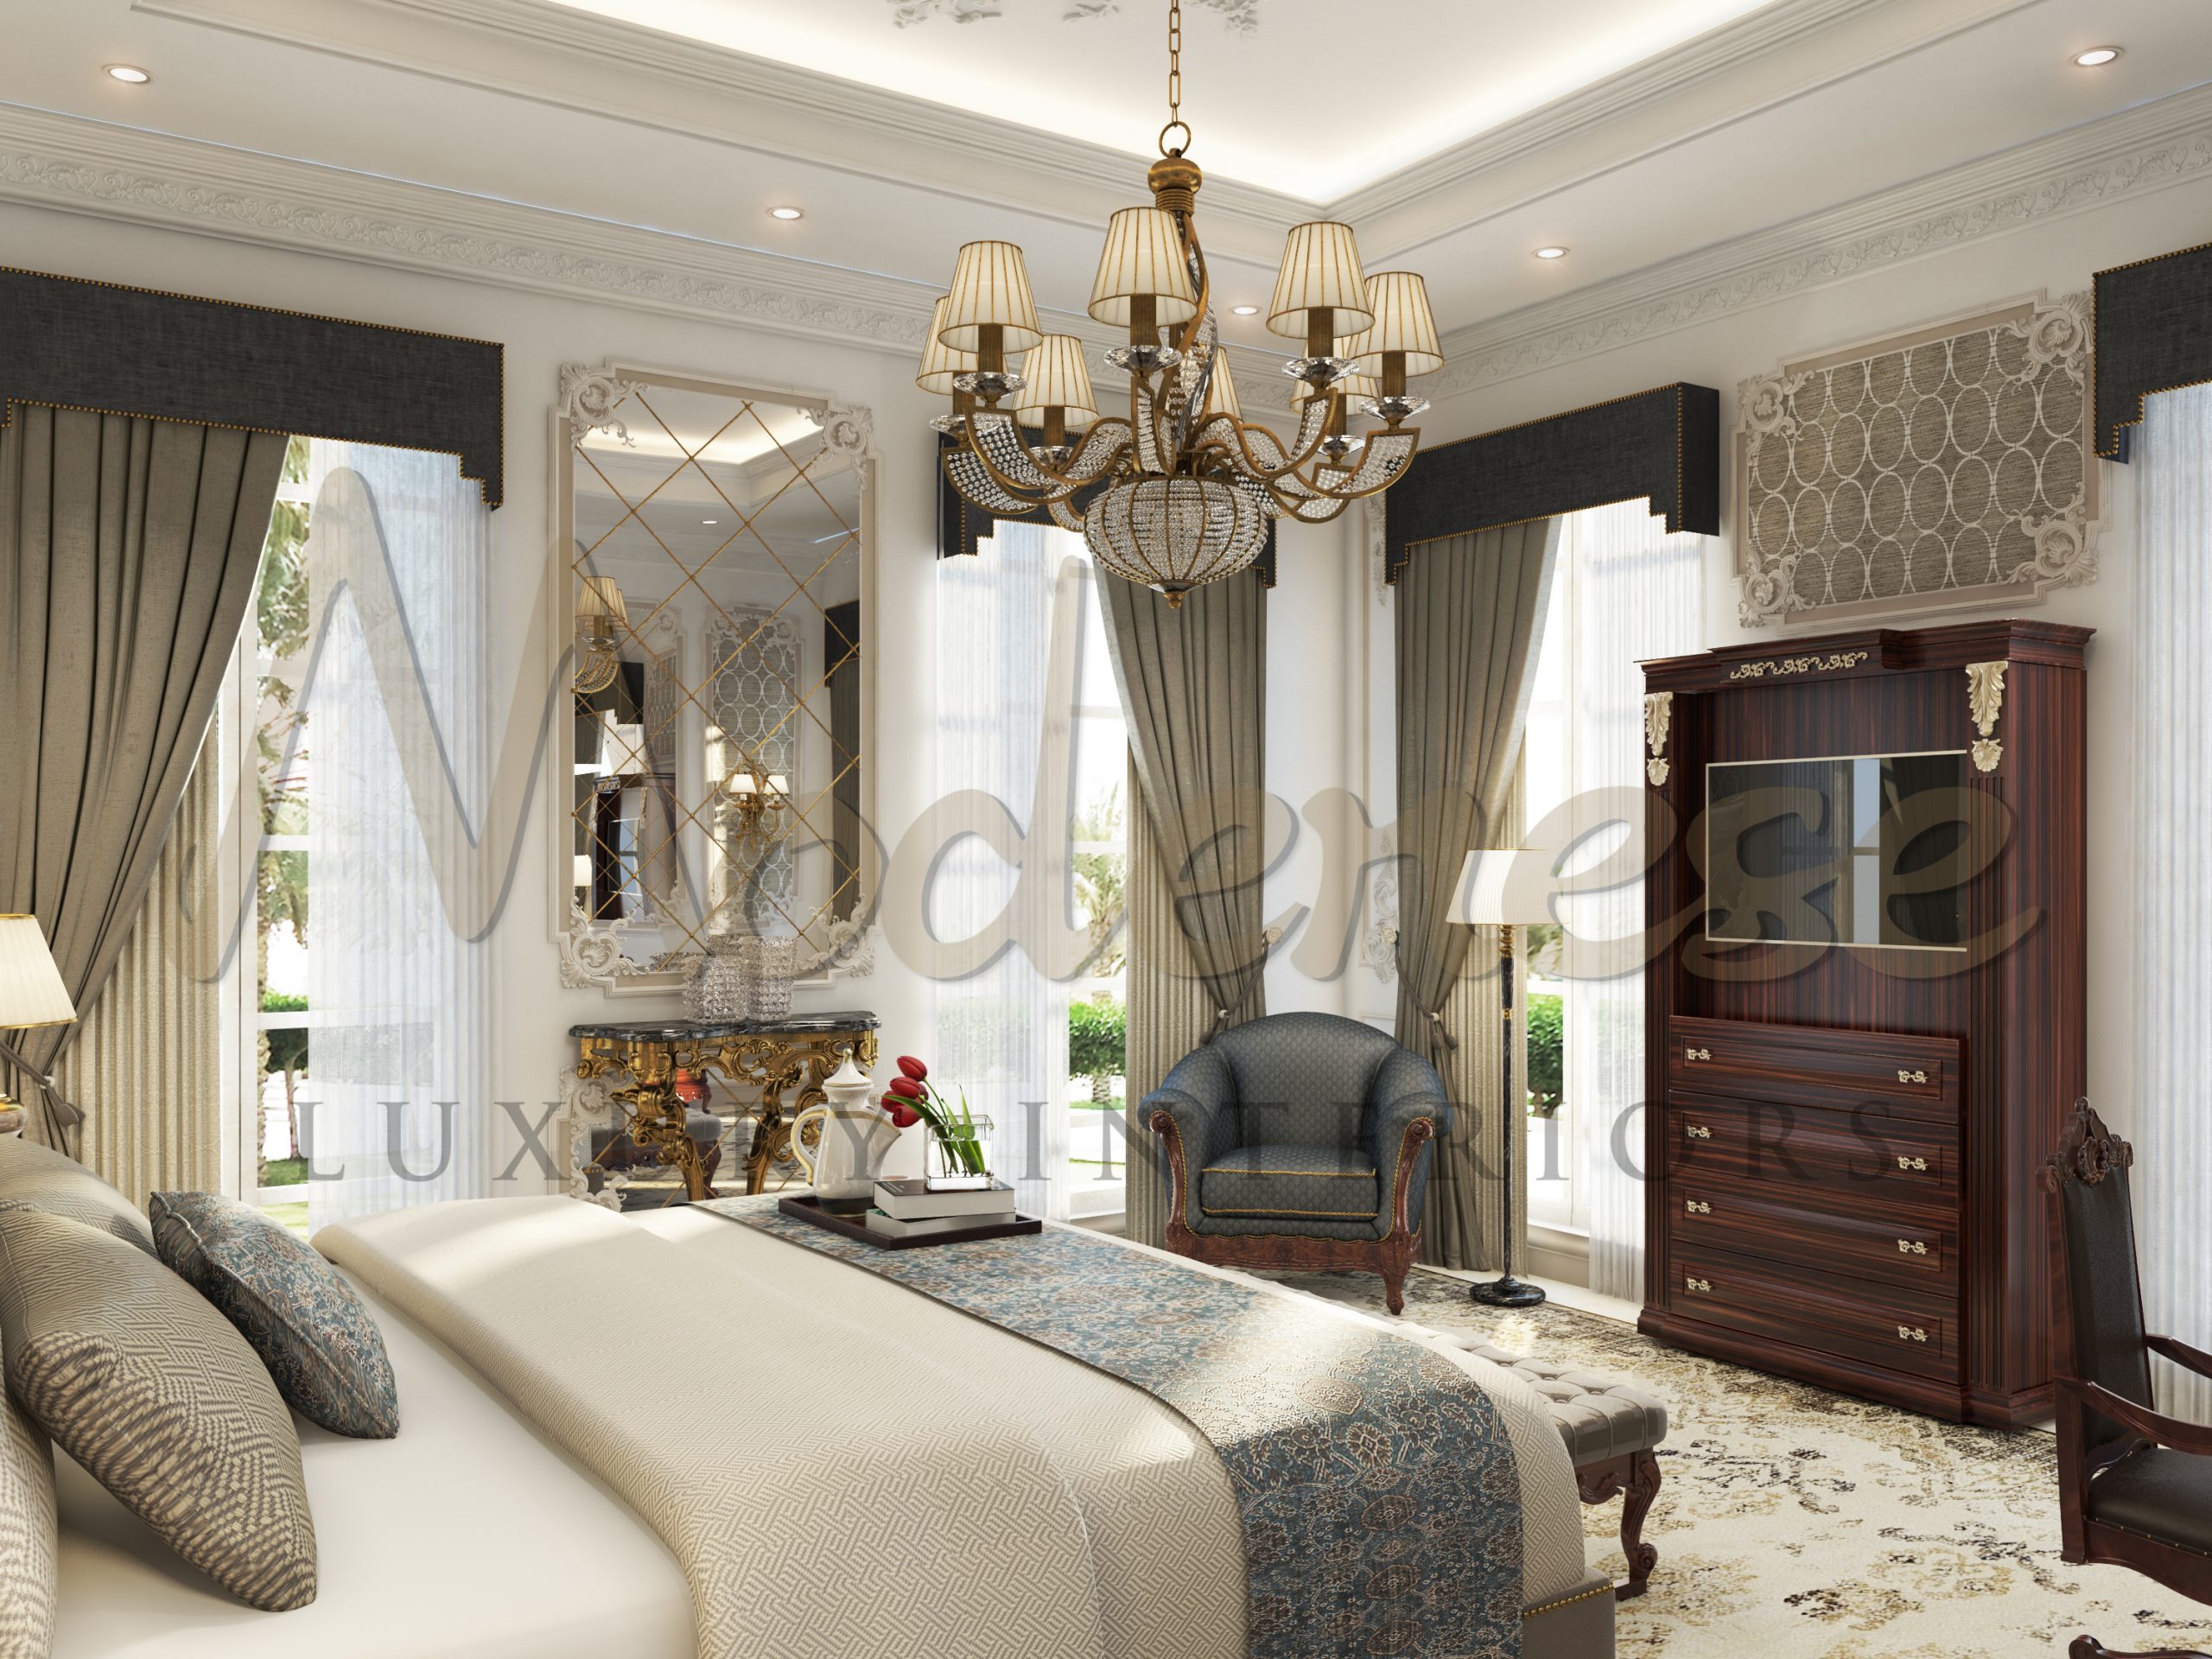 Moroccan Interior Design Style For Villa in Africa